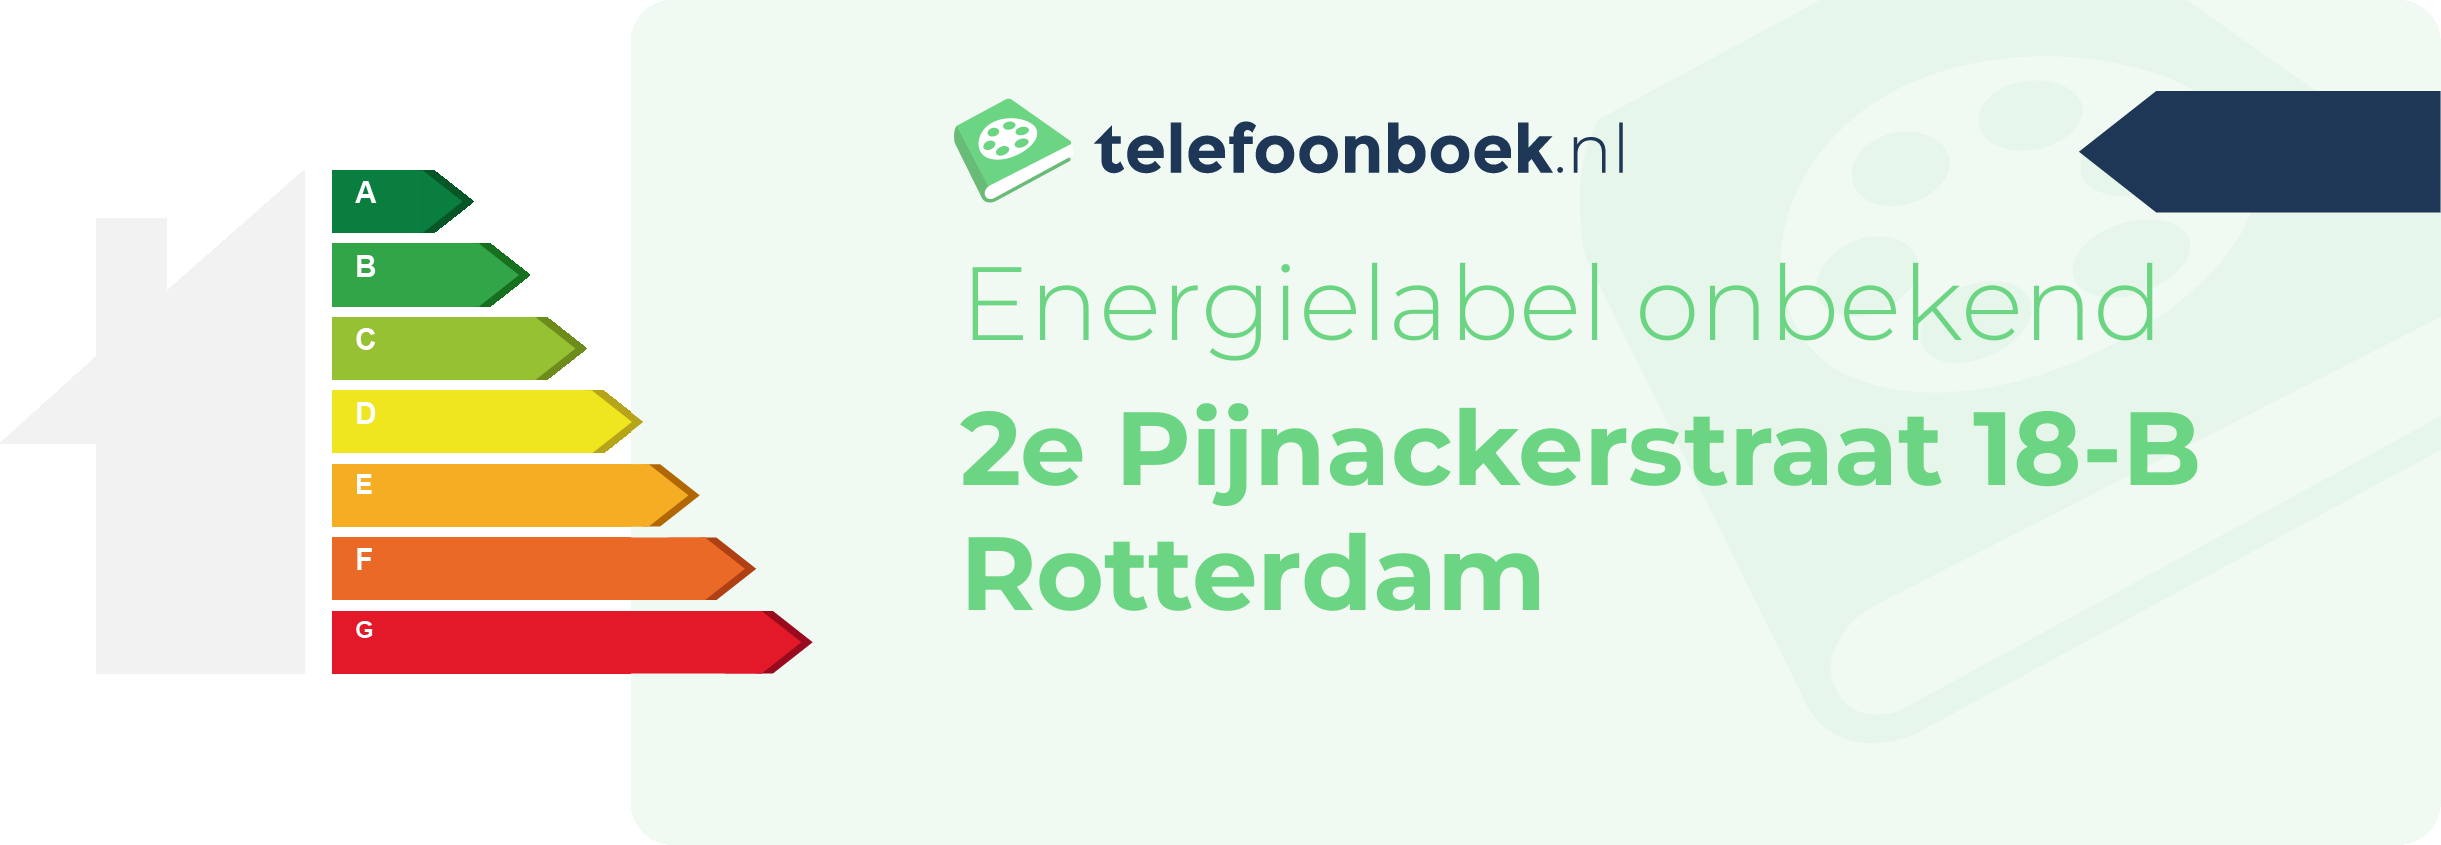 Energielabel 2e Pijnackerstraat 18-B Rotterdam